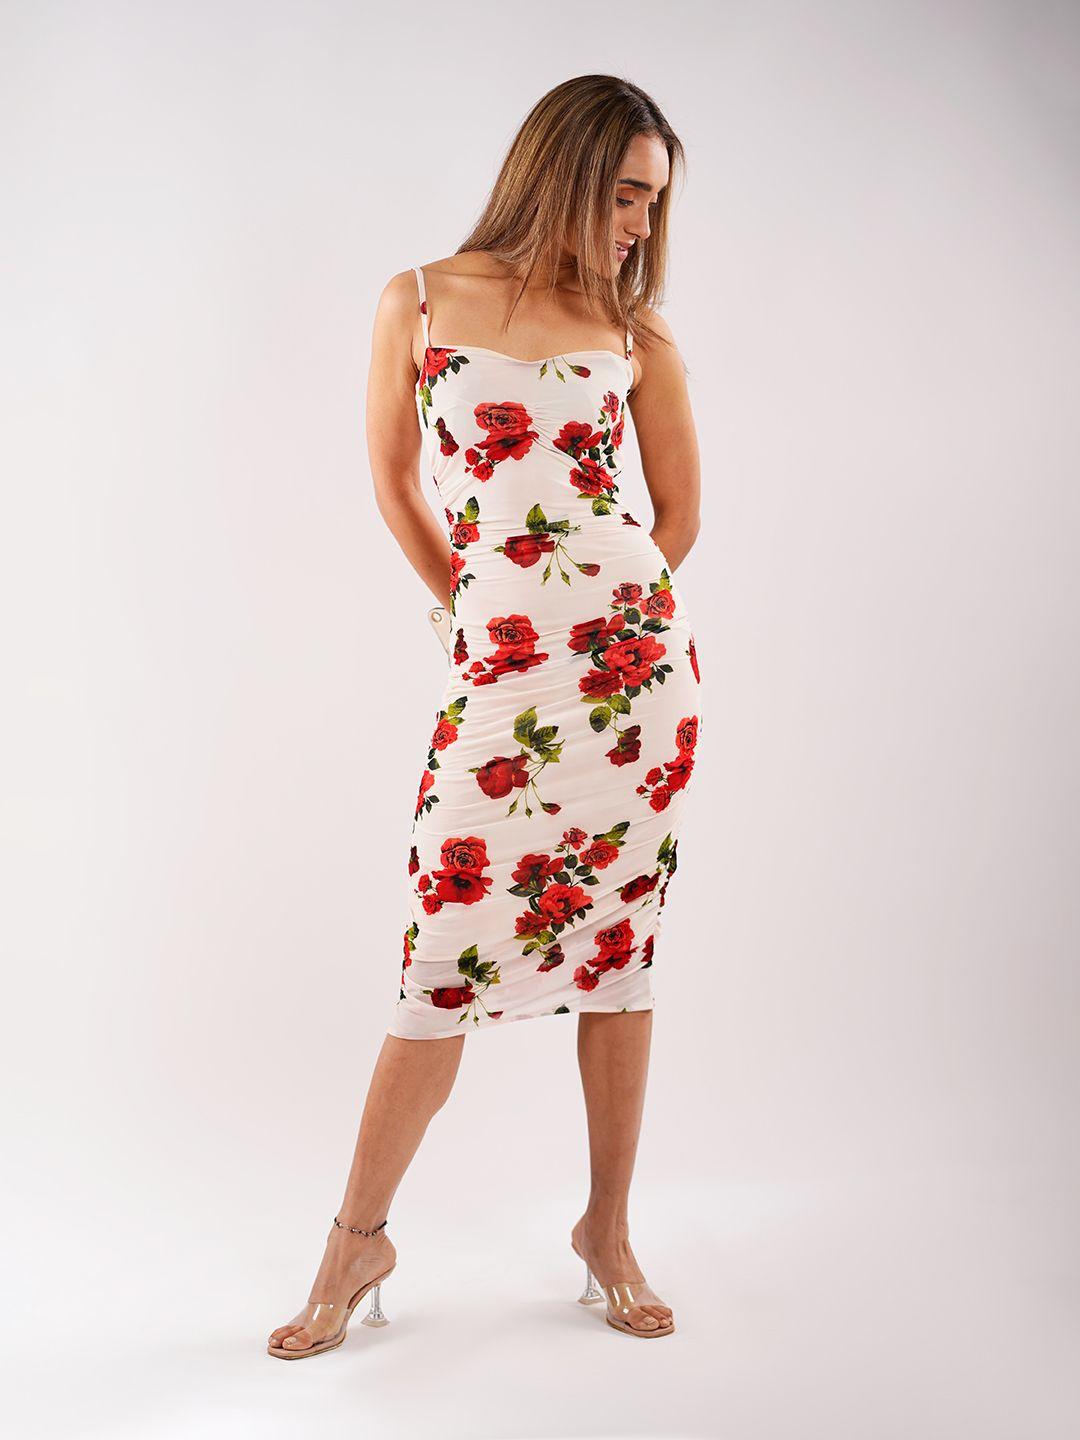 stylecast x hersheinbox floral print bodycon midi dress